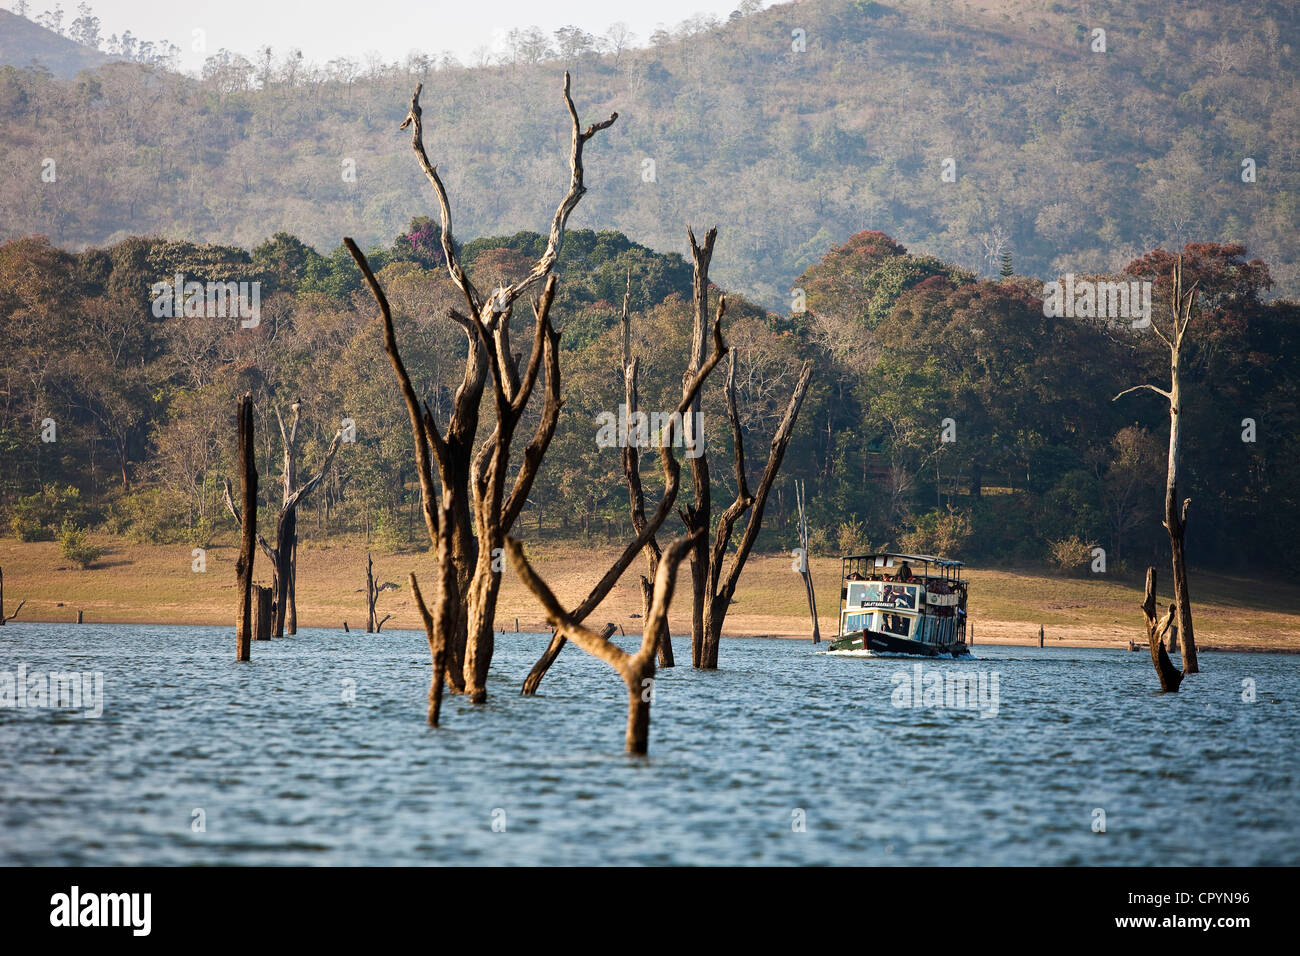 India Kerala State, Perriyar, gita in barca sul lago di scoprire la fauna Foto Stock